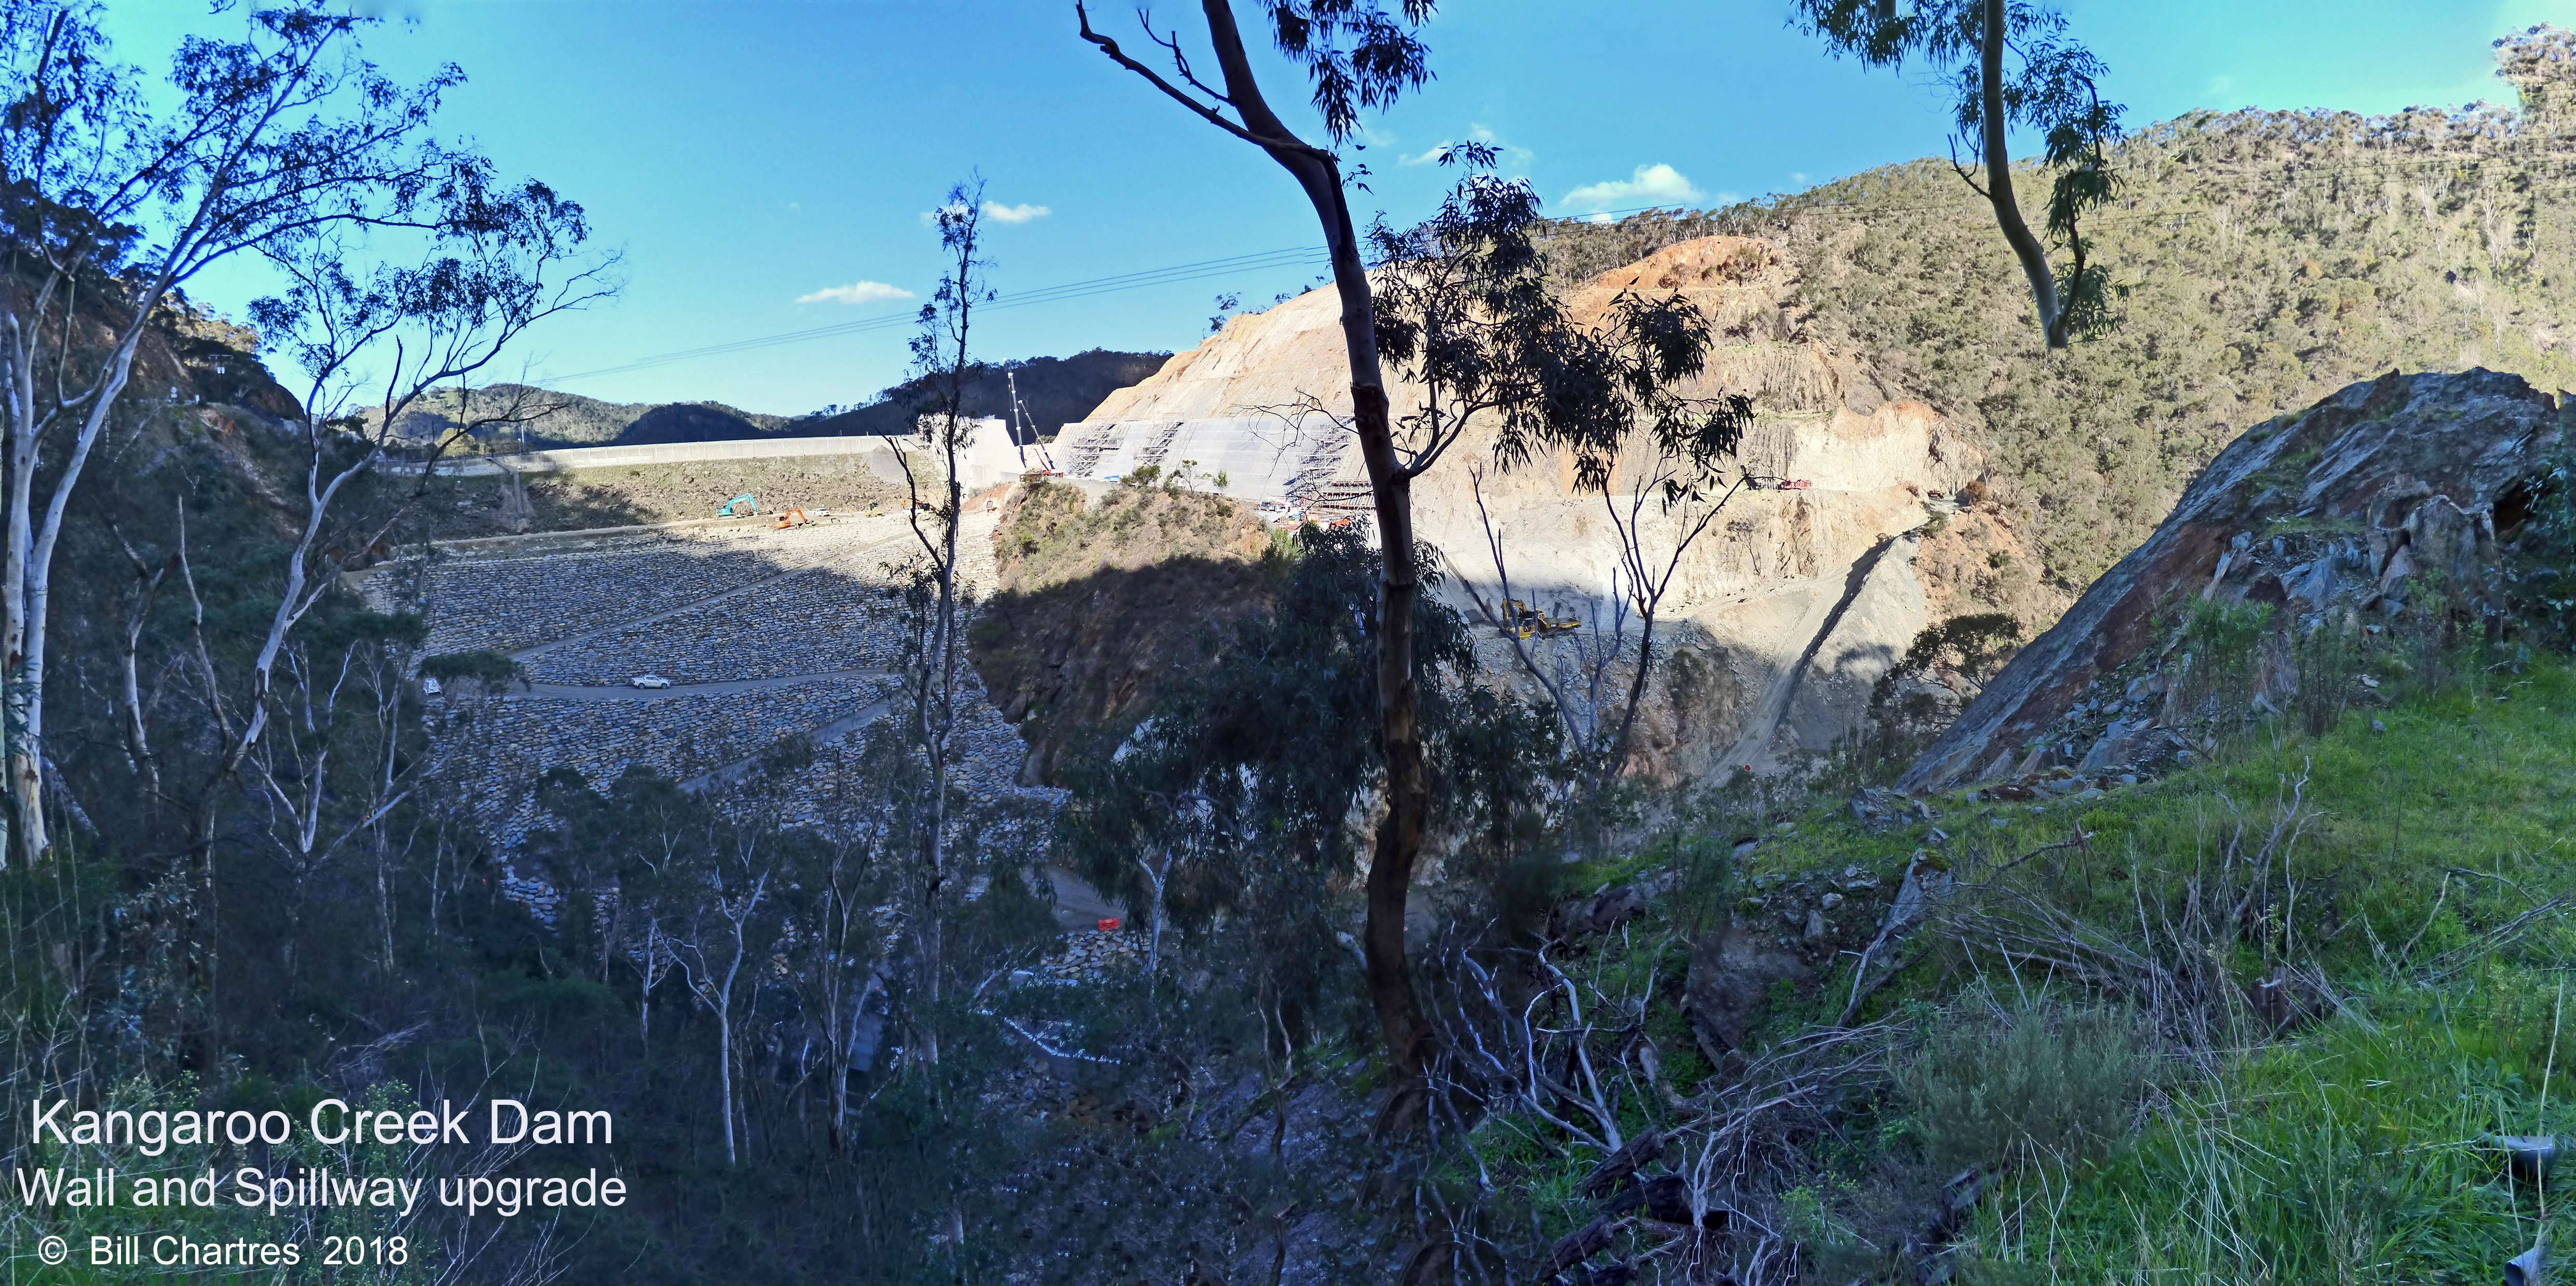 Kangaroo Creek Dam wall embankment and spillway